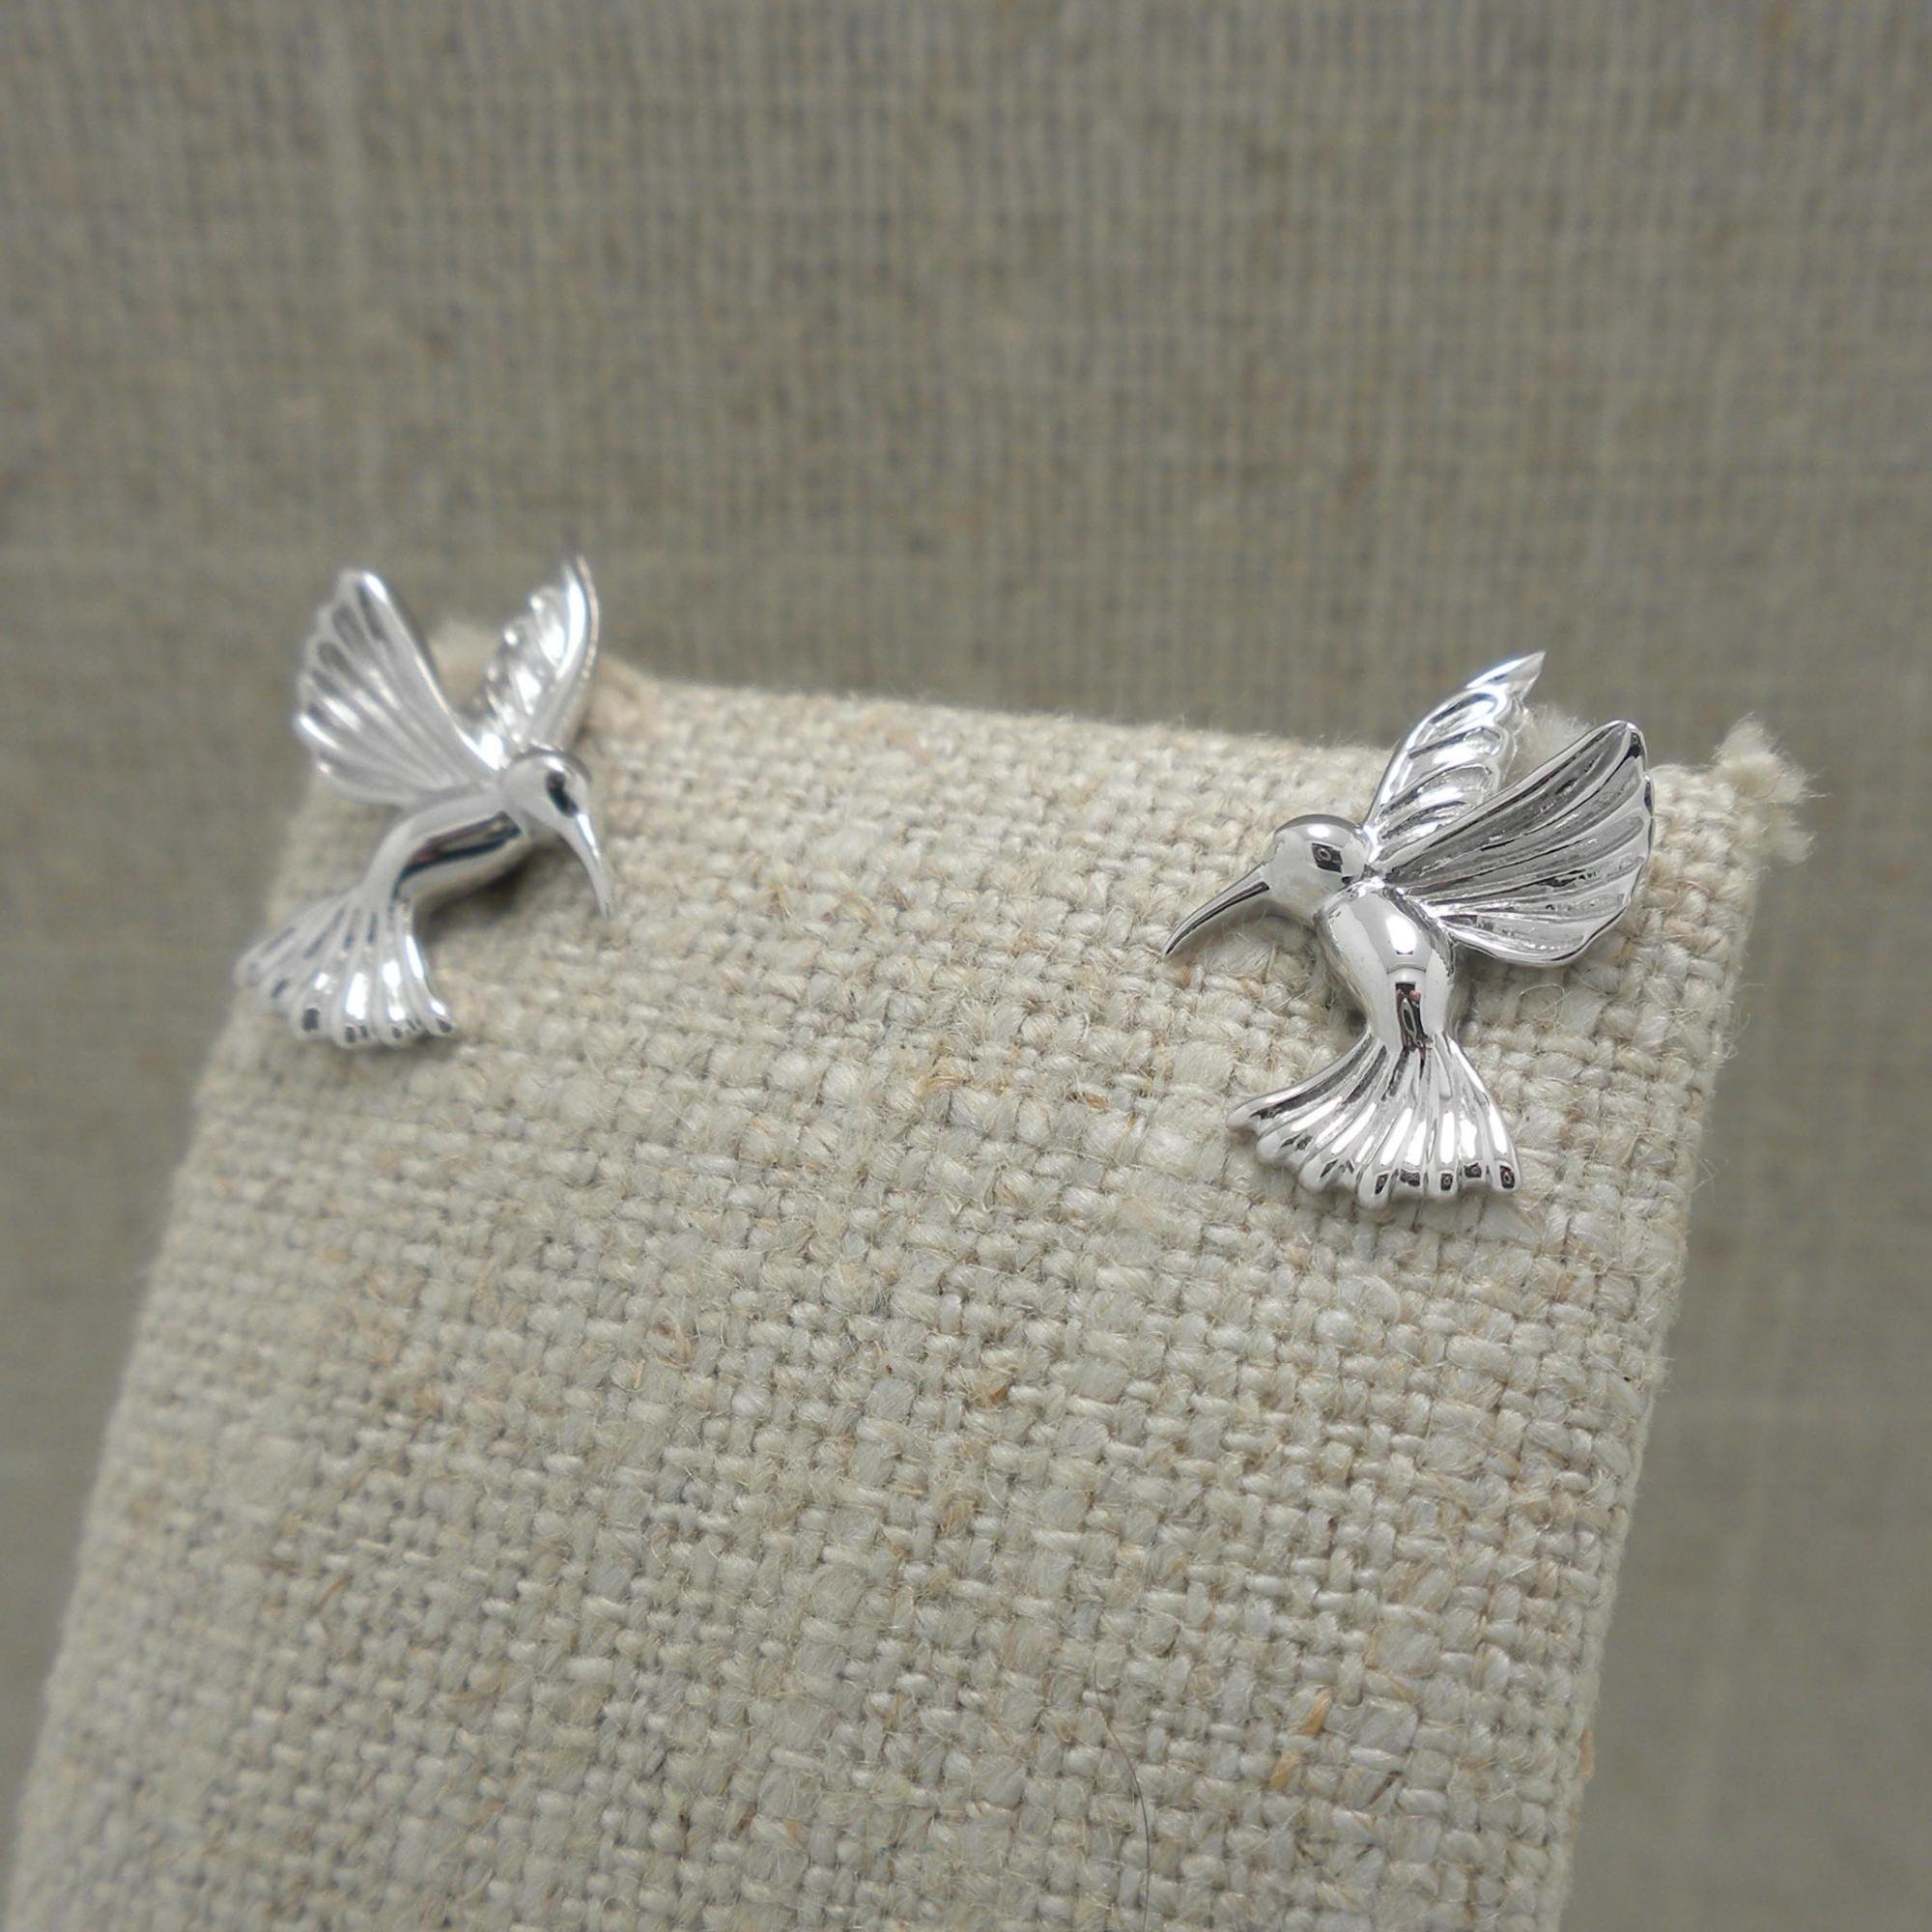 Hummingbird Earrings in Sterling Silver